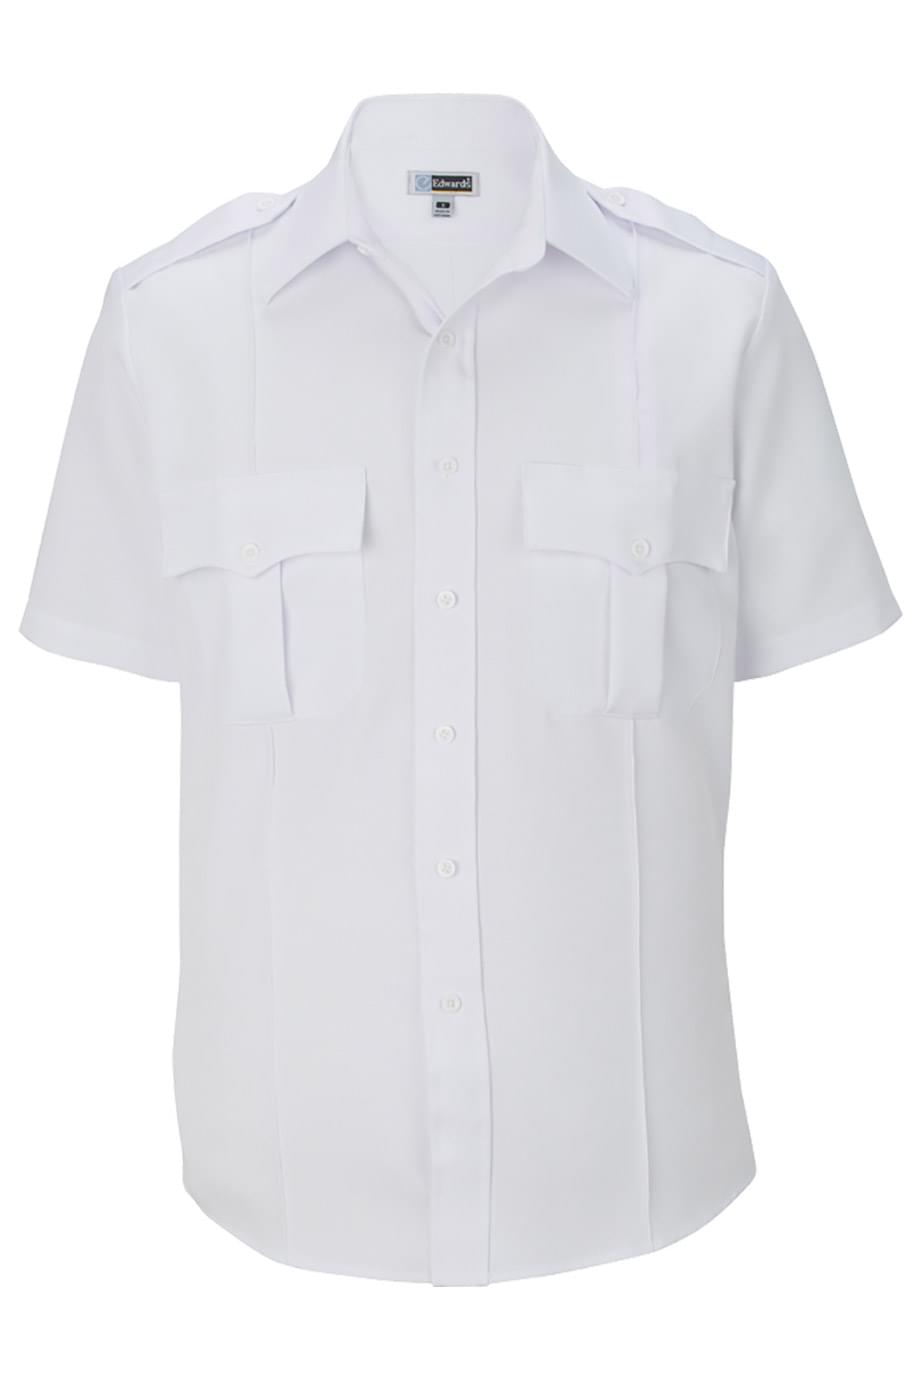 Edwards Garment 1255 - Security Short Sleeve Shirt